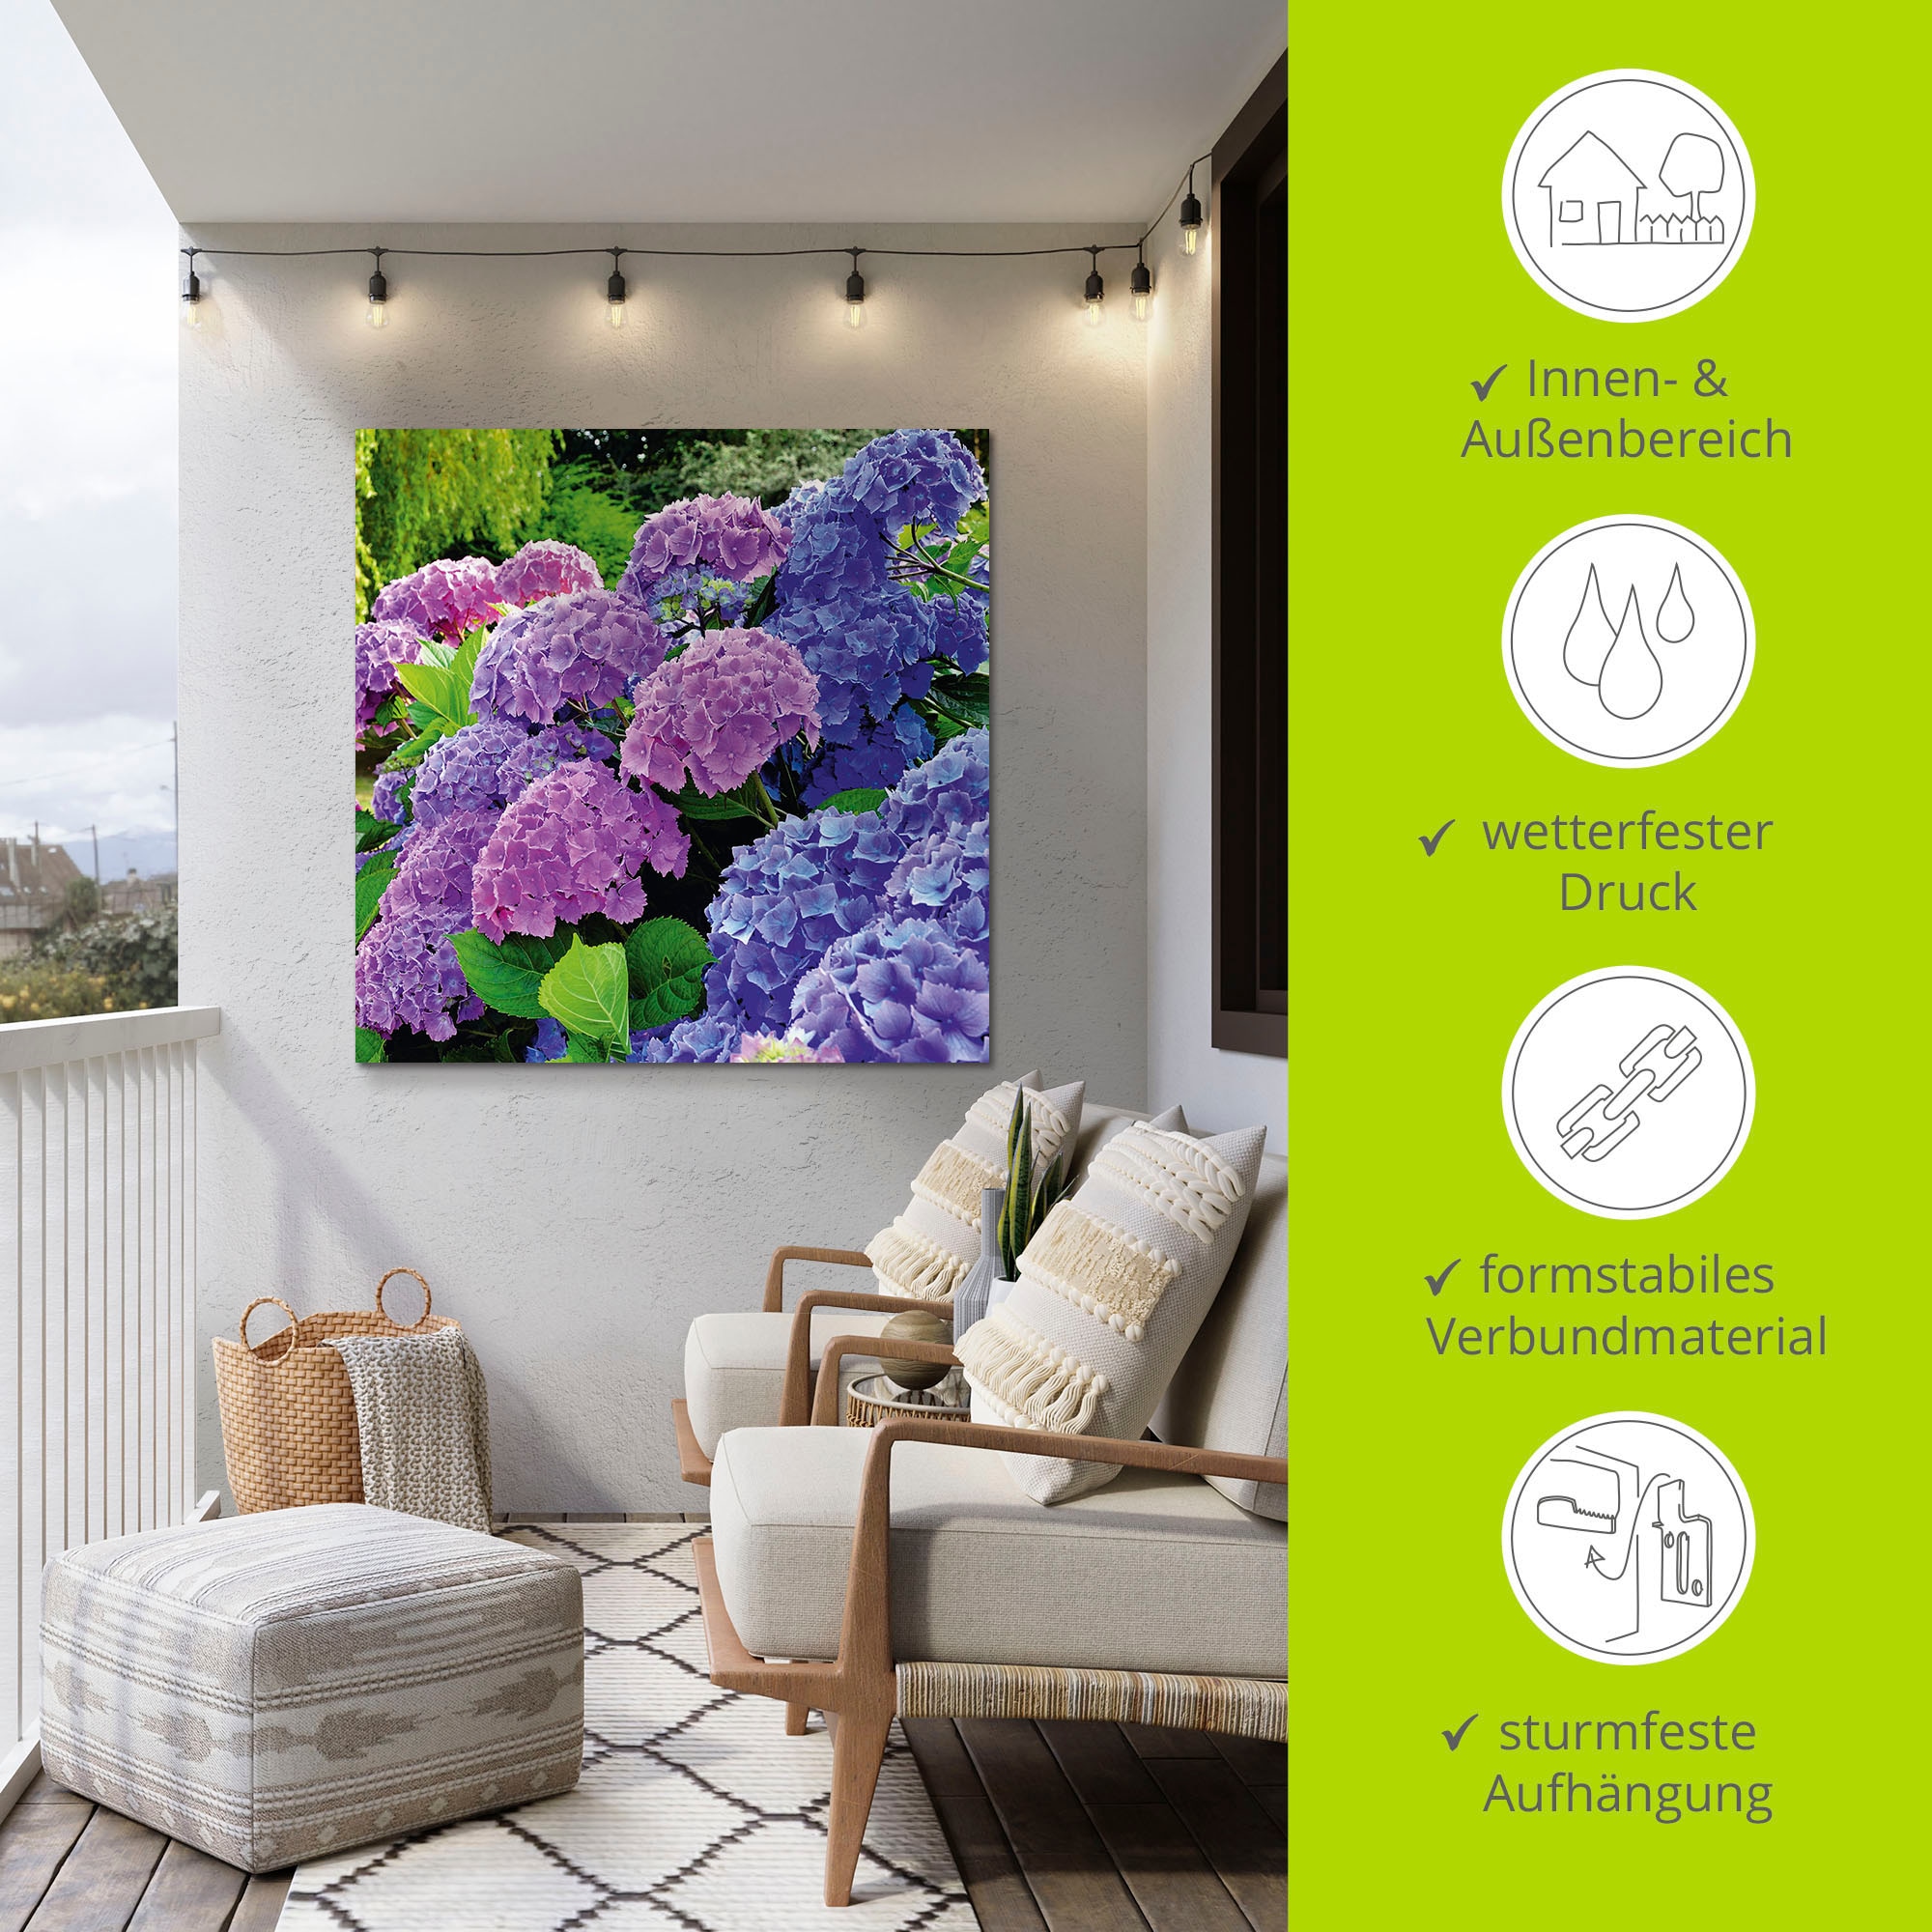 Artland Wandbild »Hortensien im Garten«, Blumen, (1 St.), als Alubild, Outdoorbild, Leinwandbild, Poster, Wandaufkleber